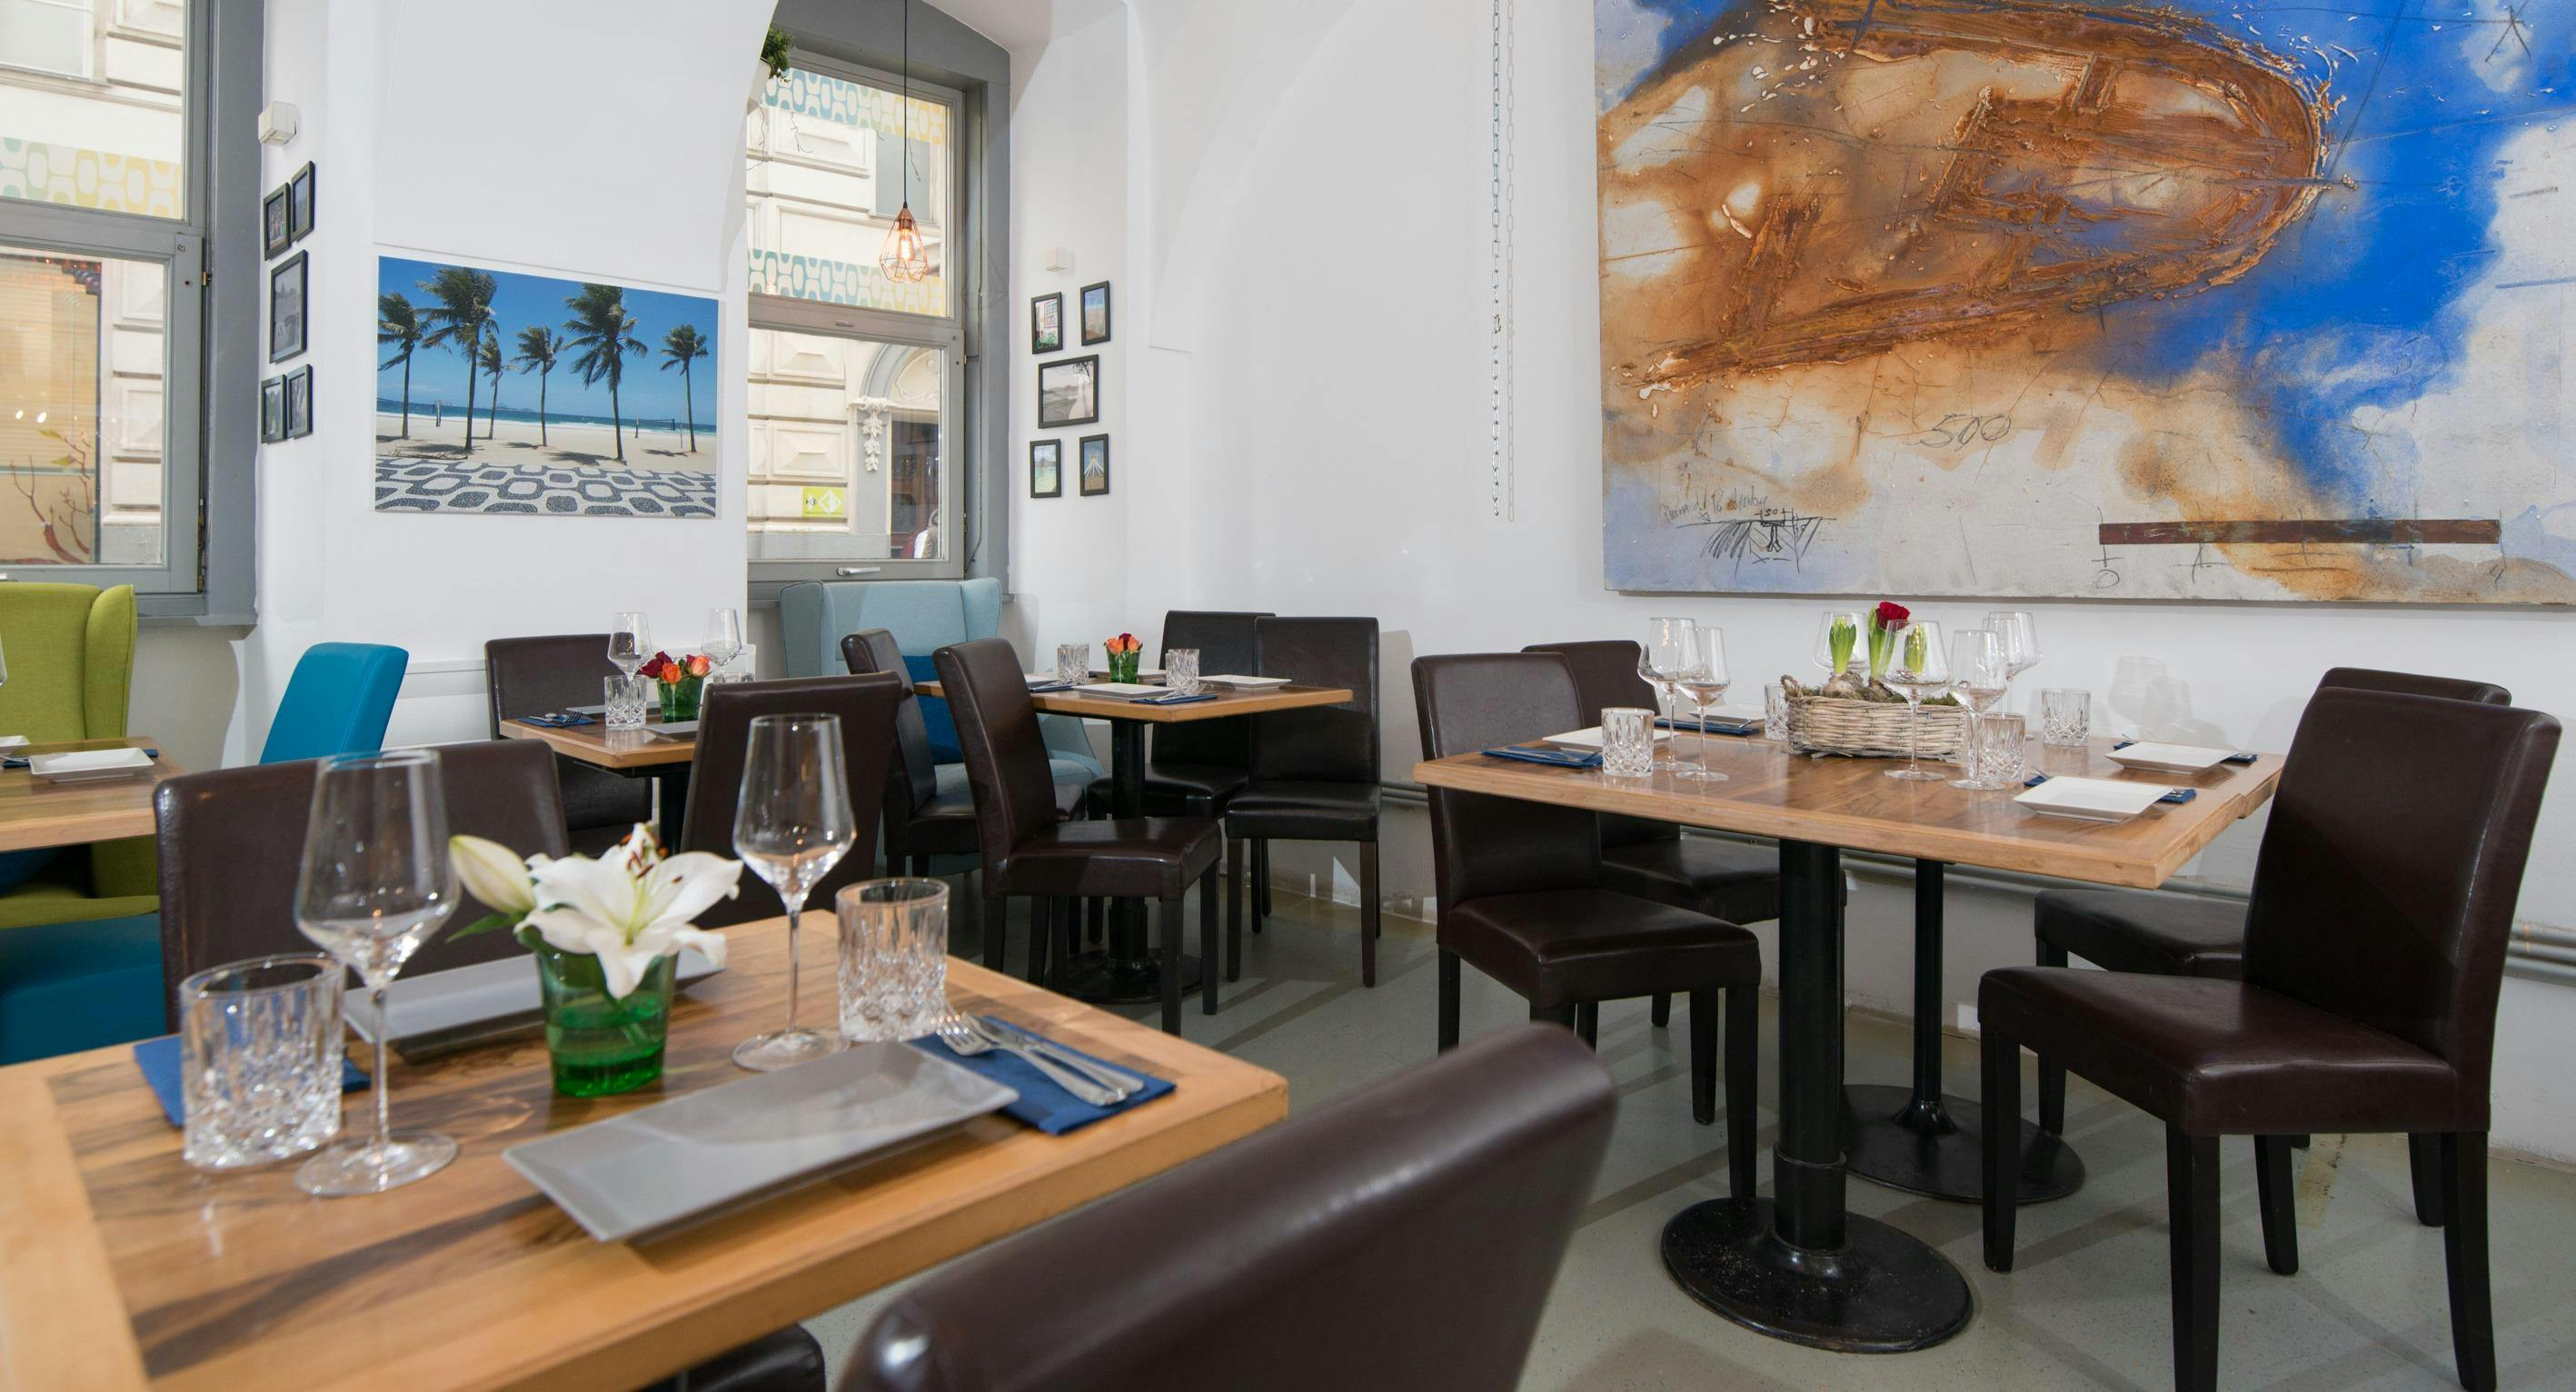 Photo of restaurant Ipanema - The Brazilian Restaurant & Cafe in 1. District, Vienna